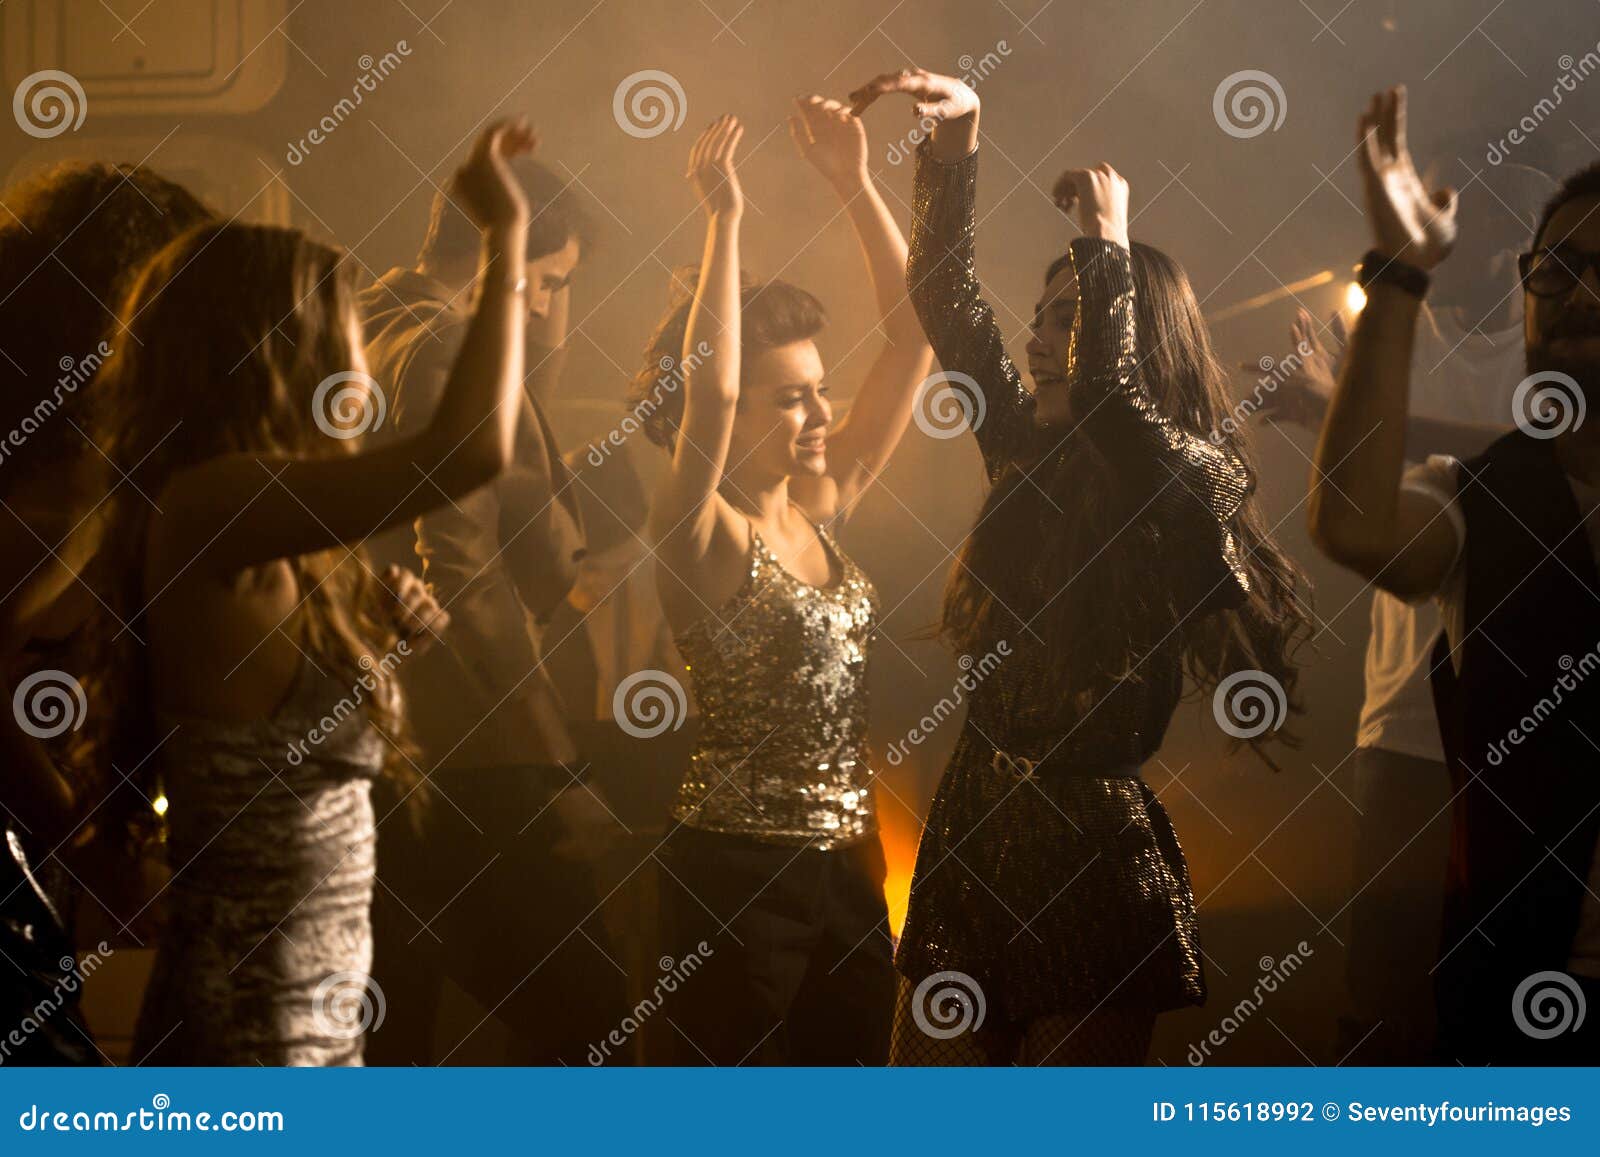 Group of Beautiful Girls on Dance Floor Stock Photo - Image of funky ...